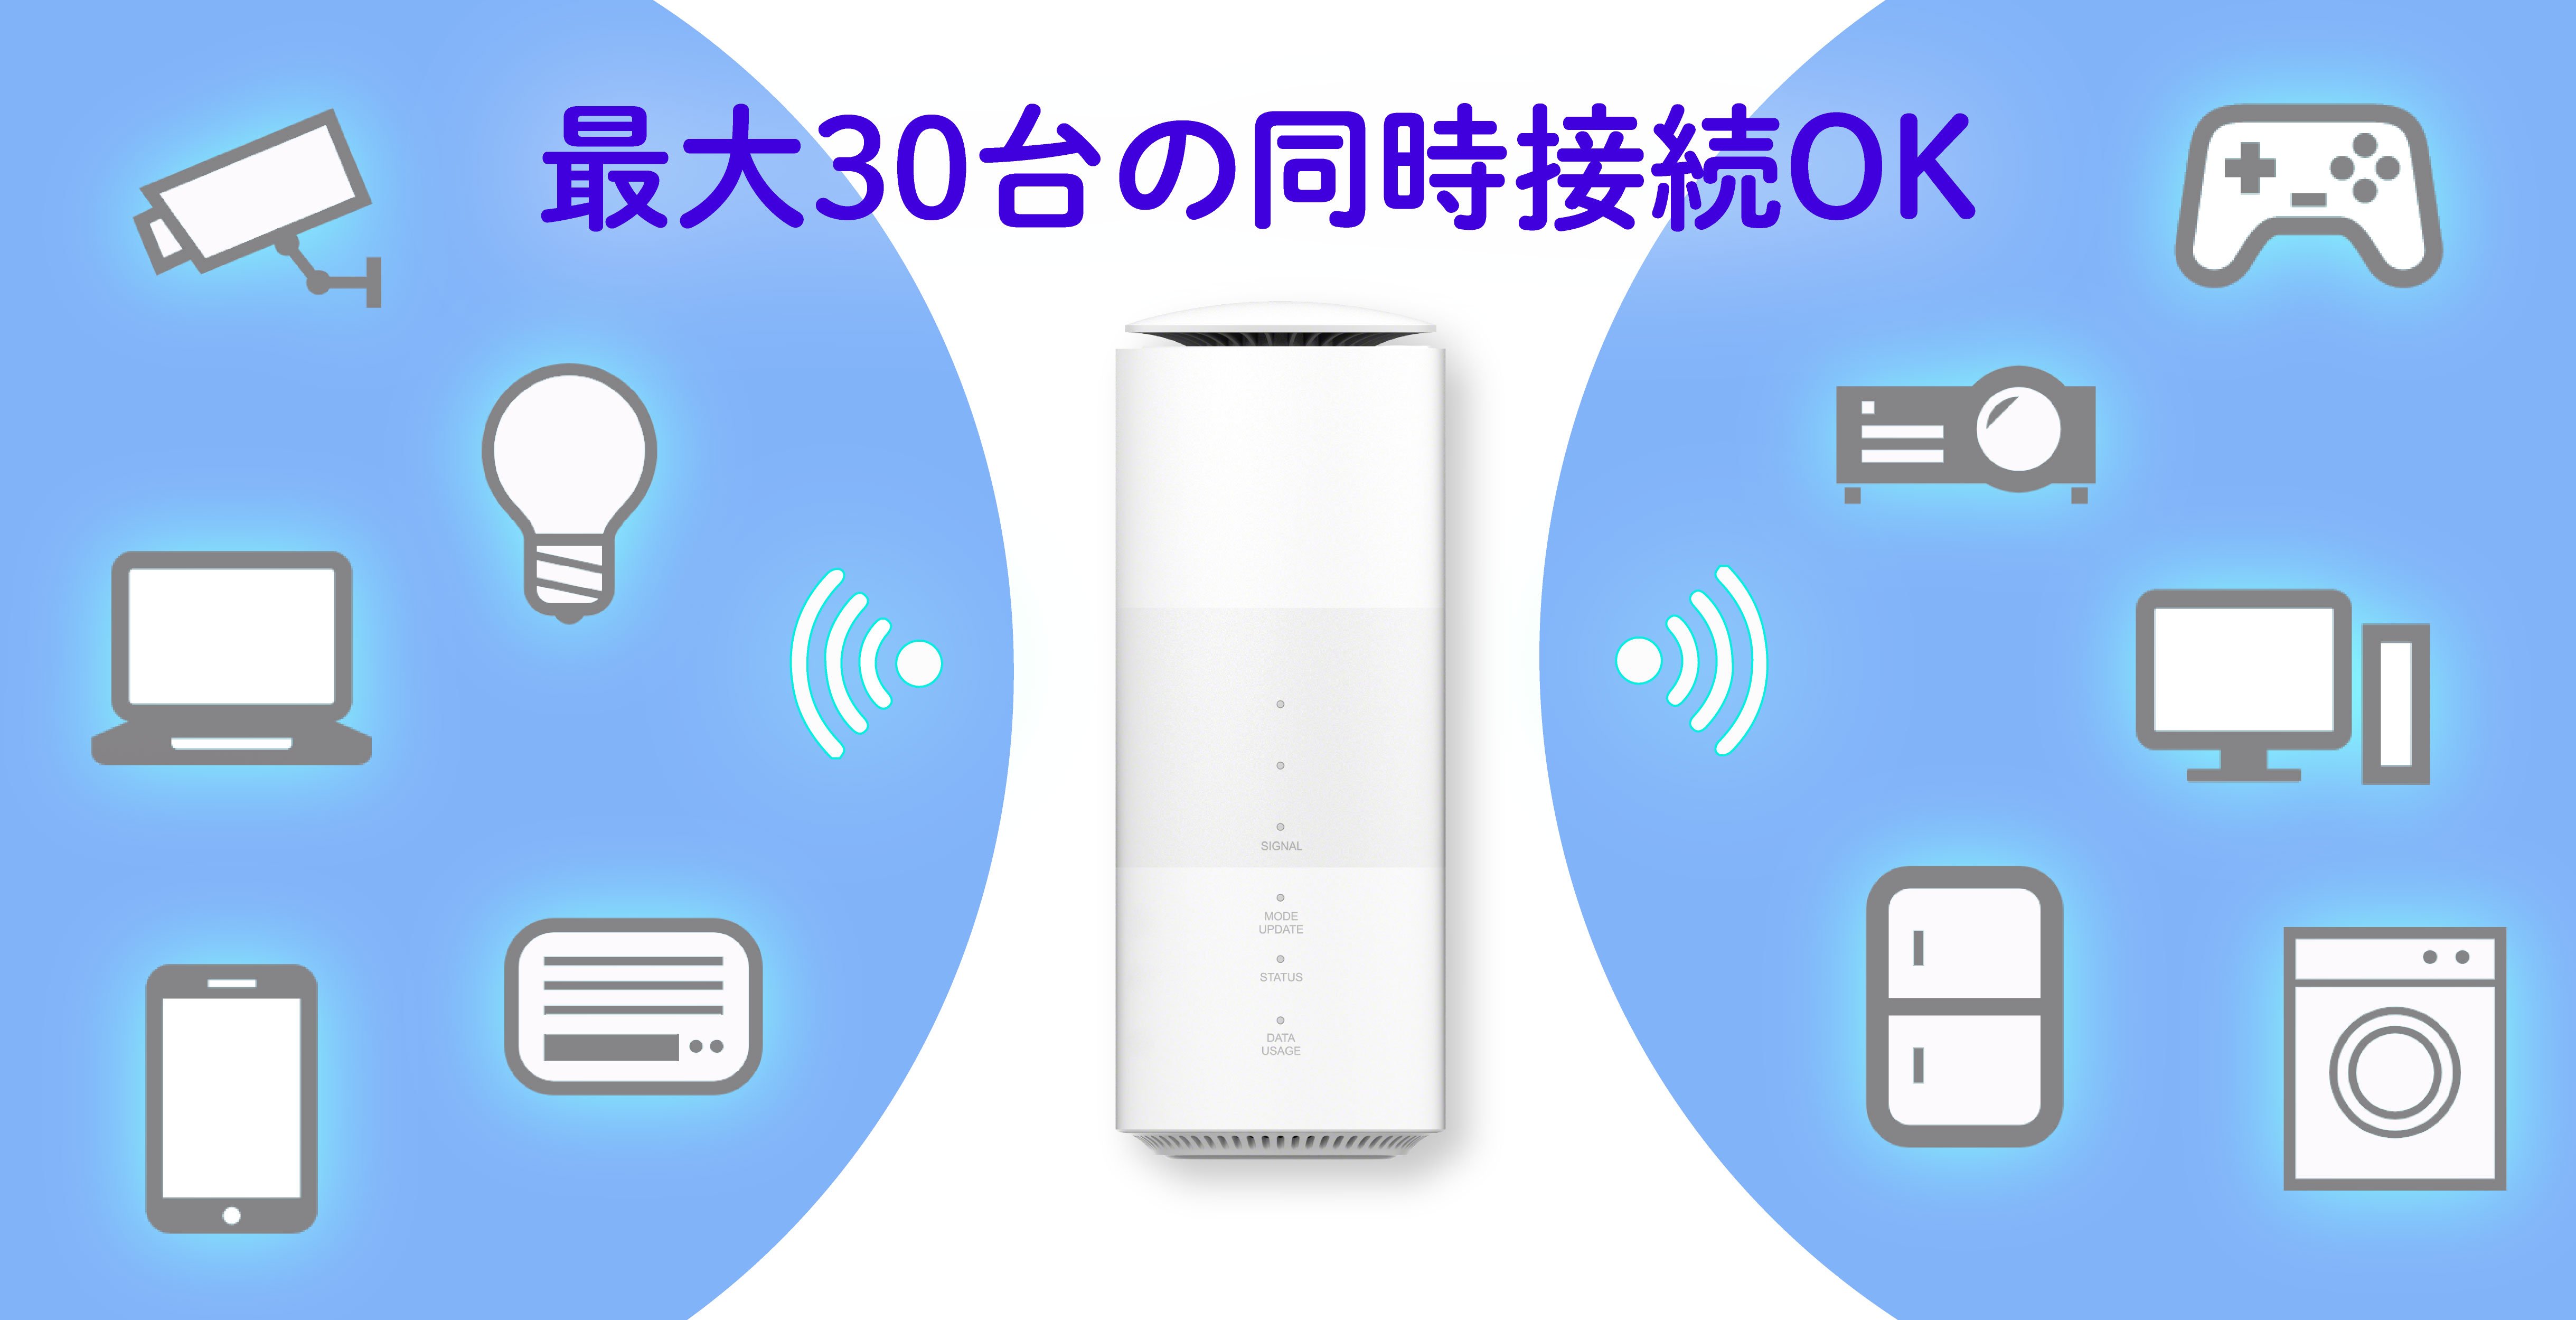 wimax 5G au 4G LTE ホームルーター